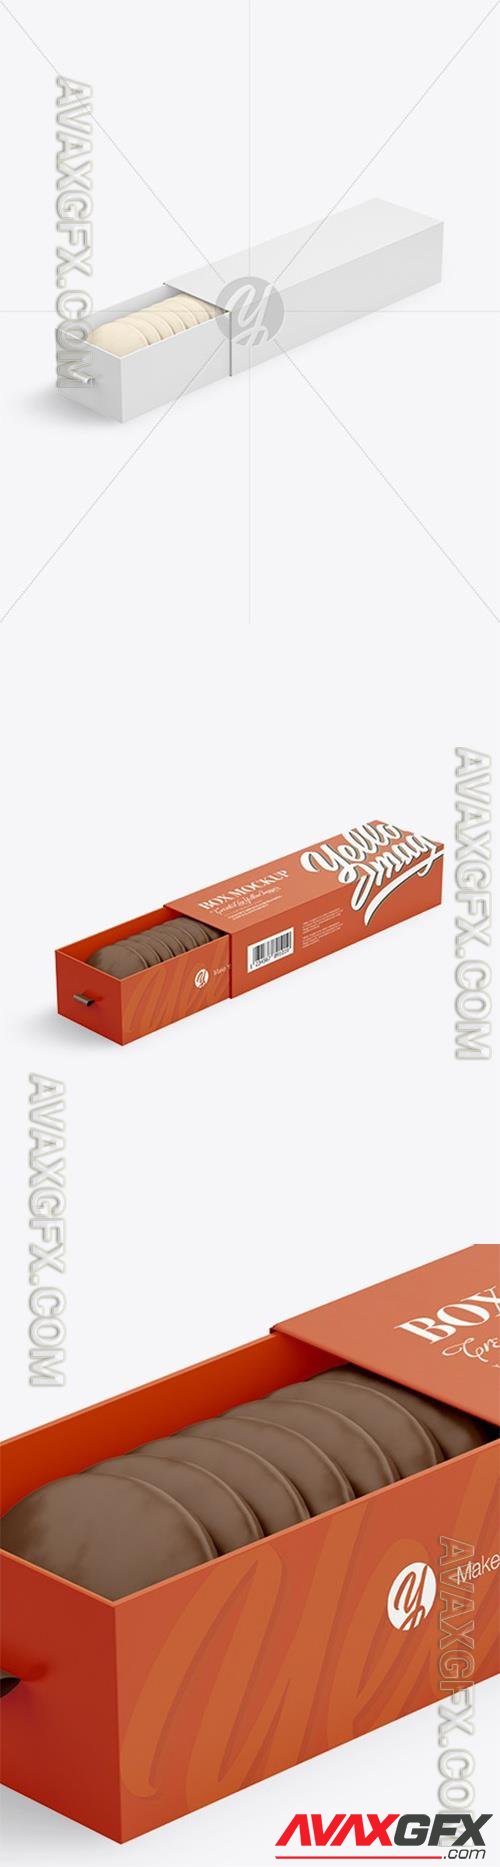 Chocolate Cookie Box Mockup 97500 TIF